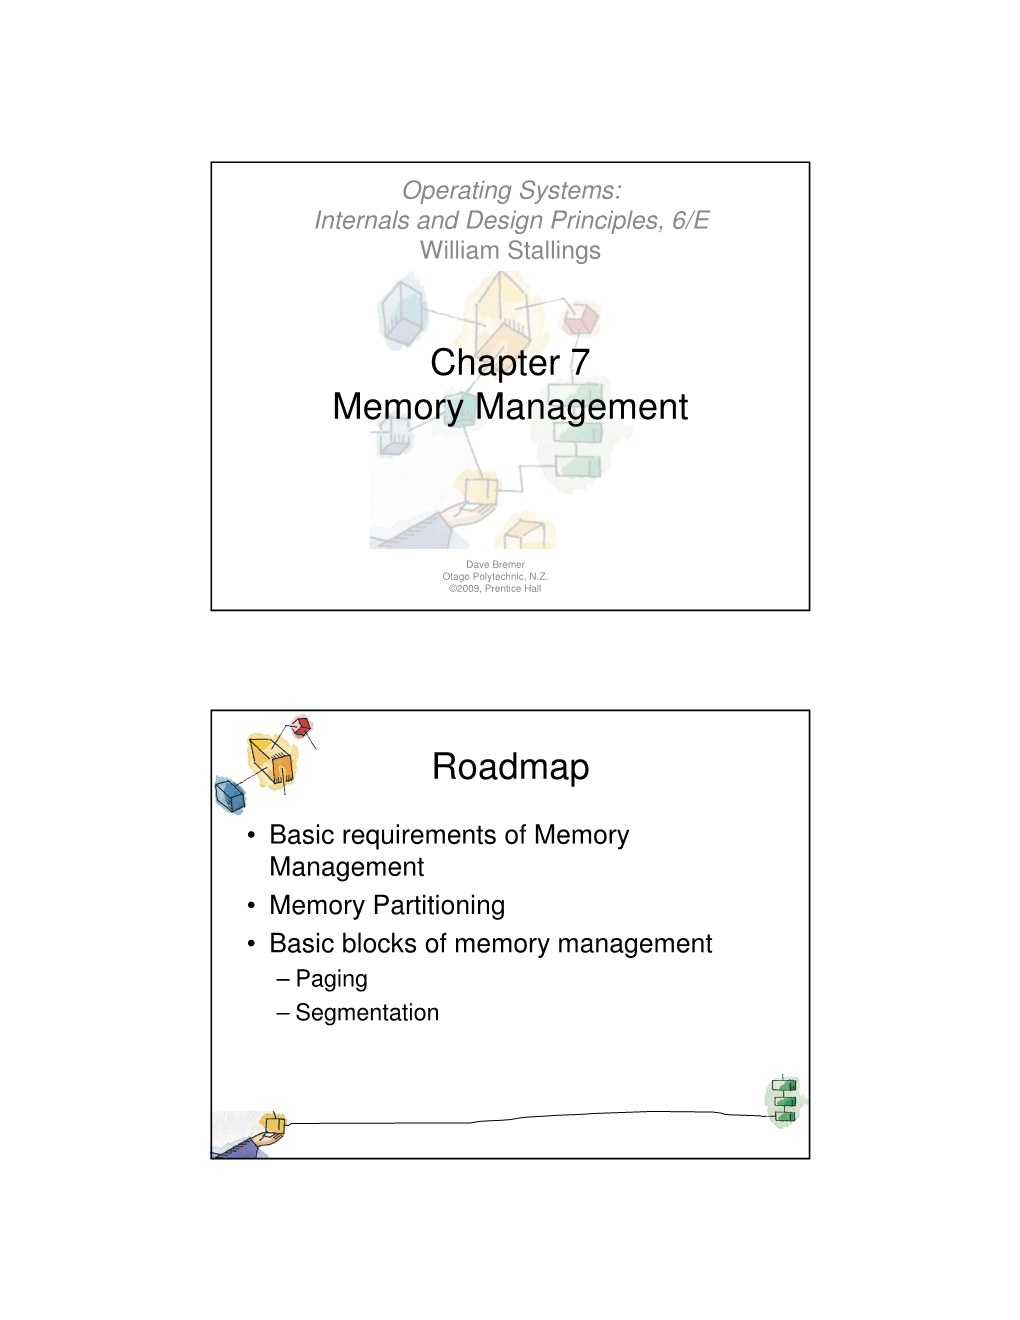 Chapter 7 Memory Management Roadmap